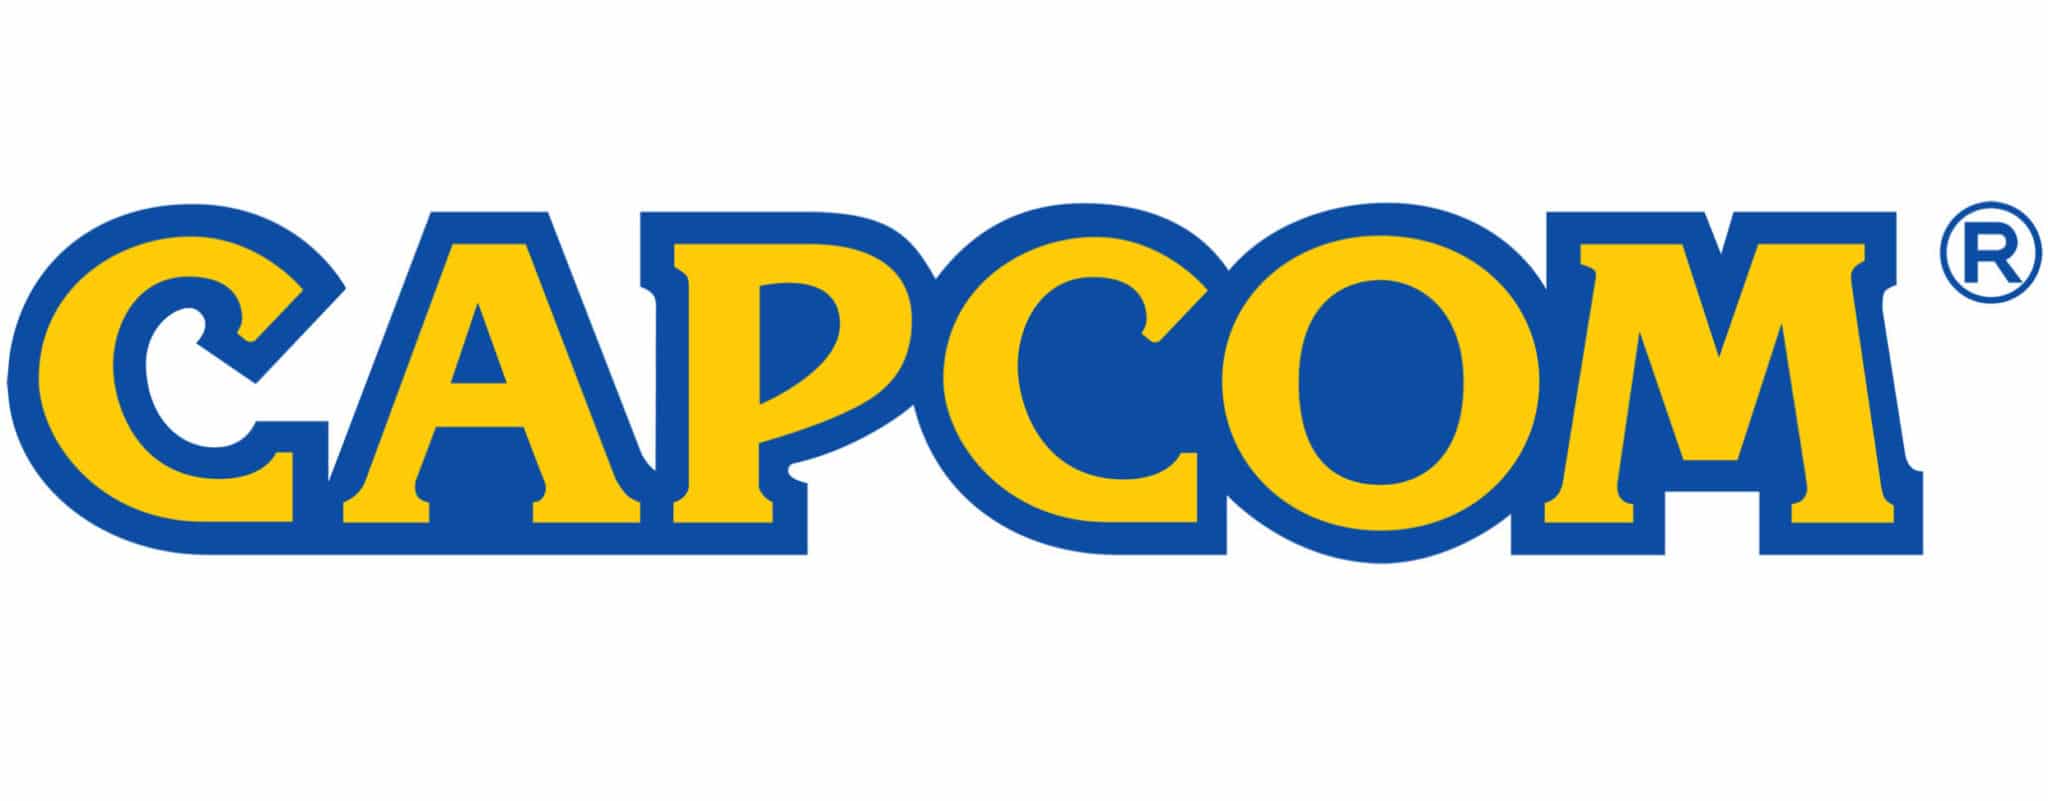 Capcom chiude lo store online negli USA 6